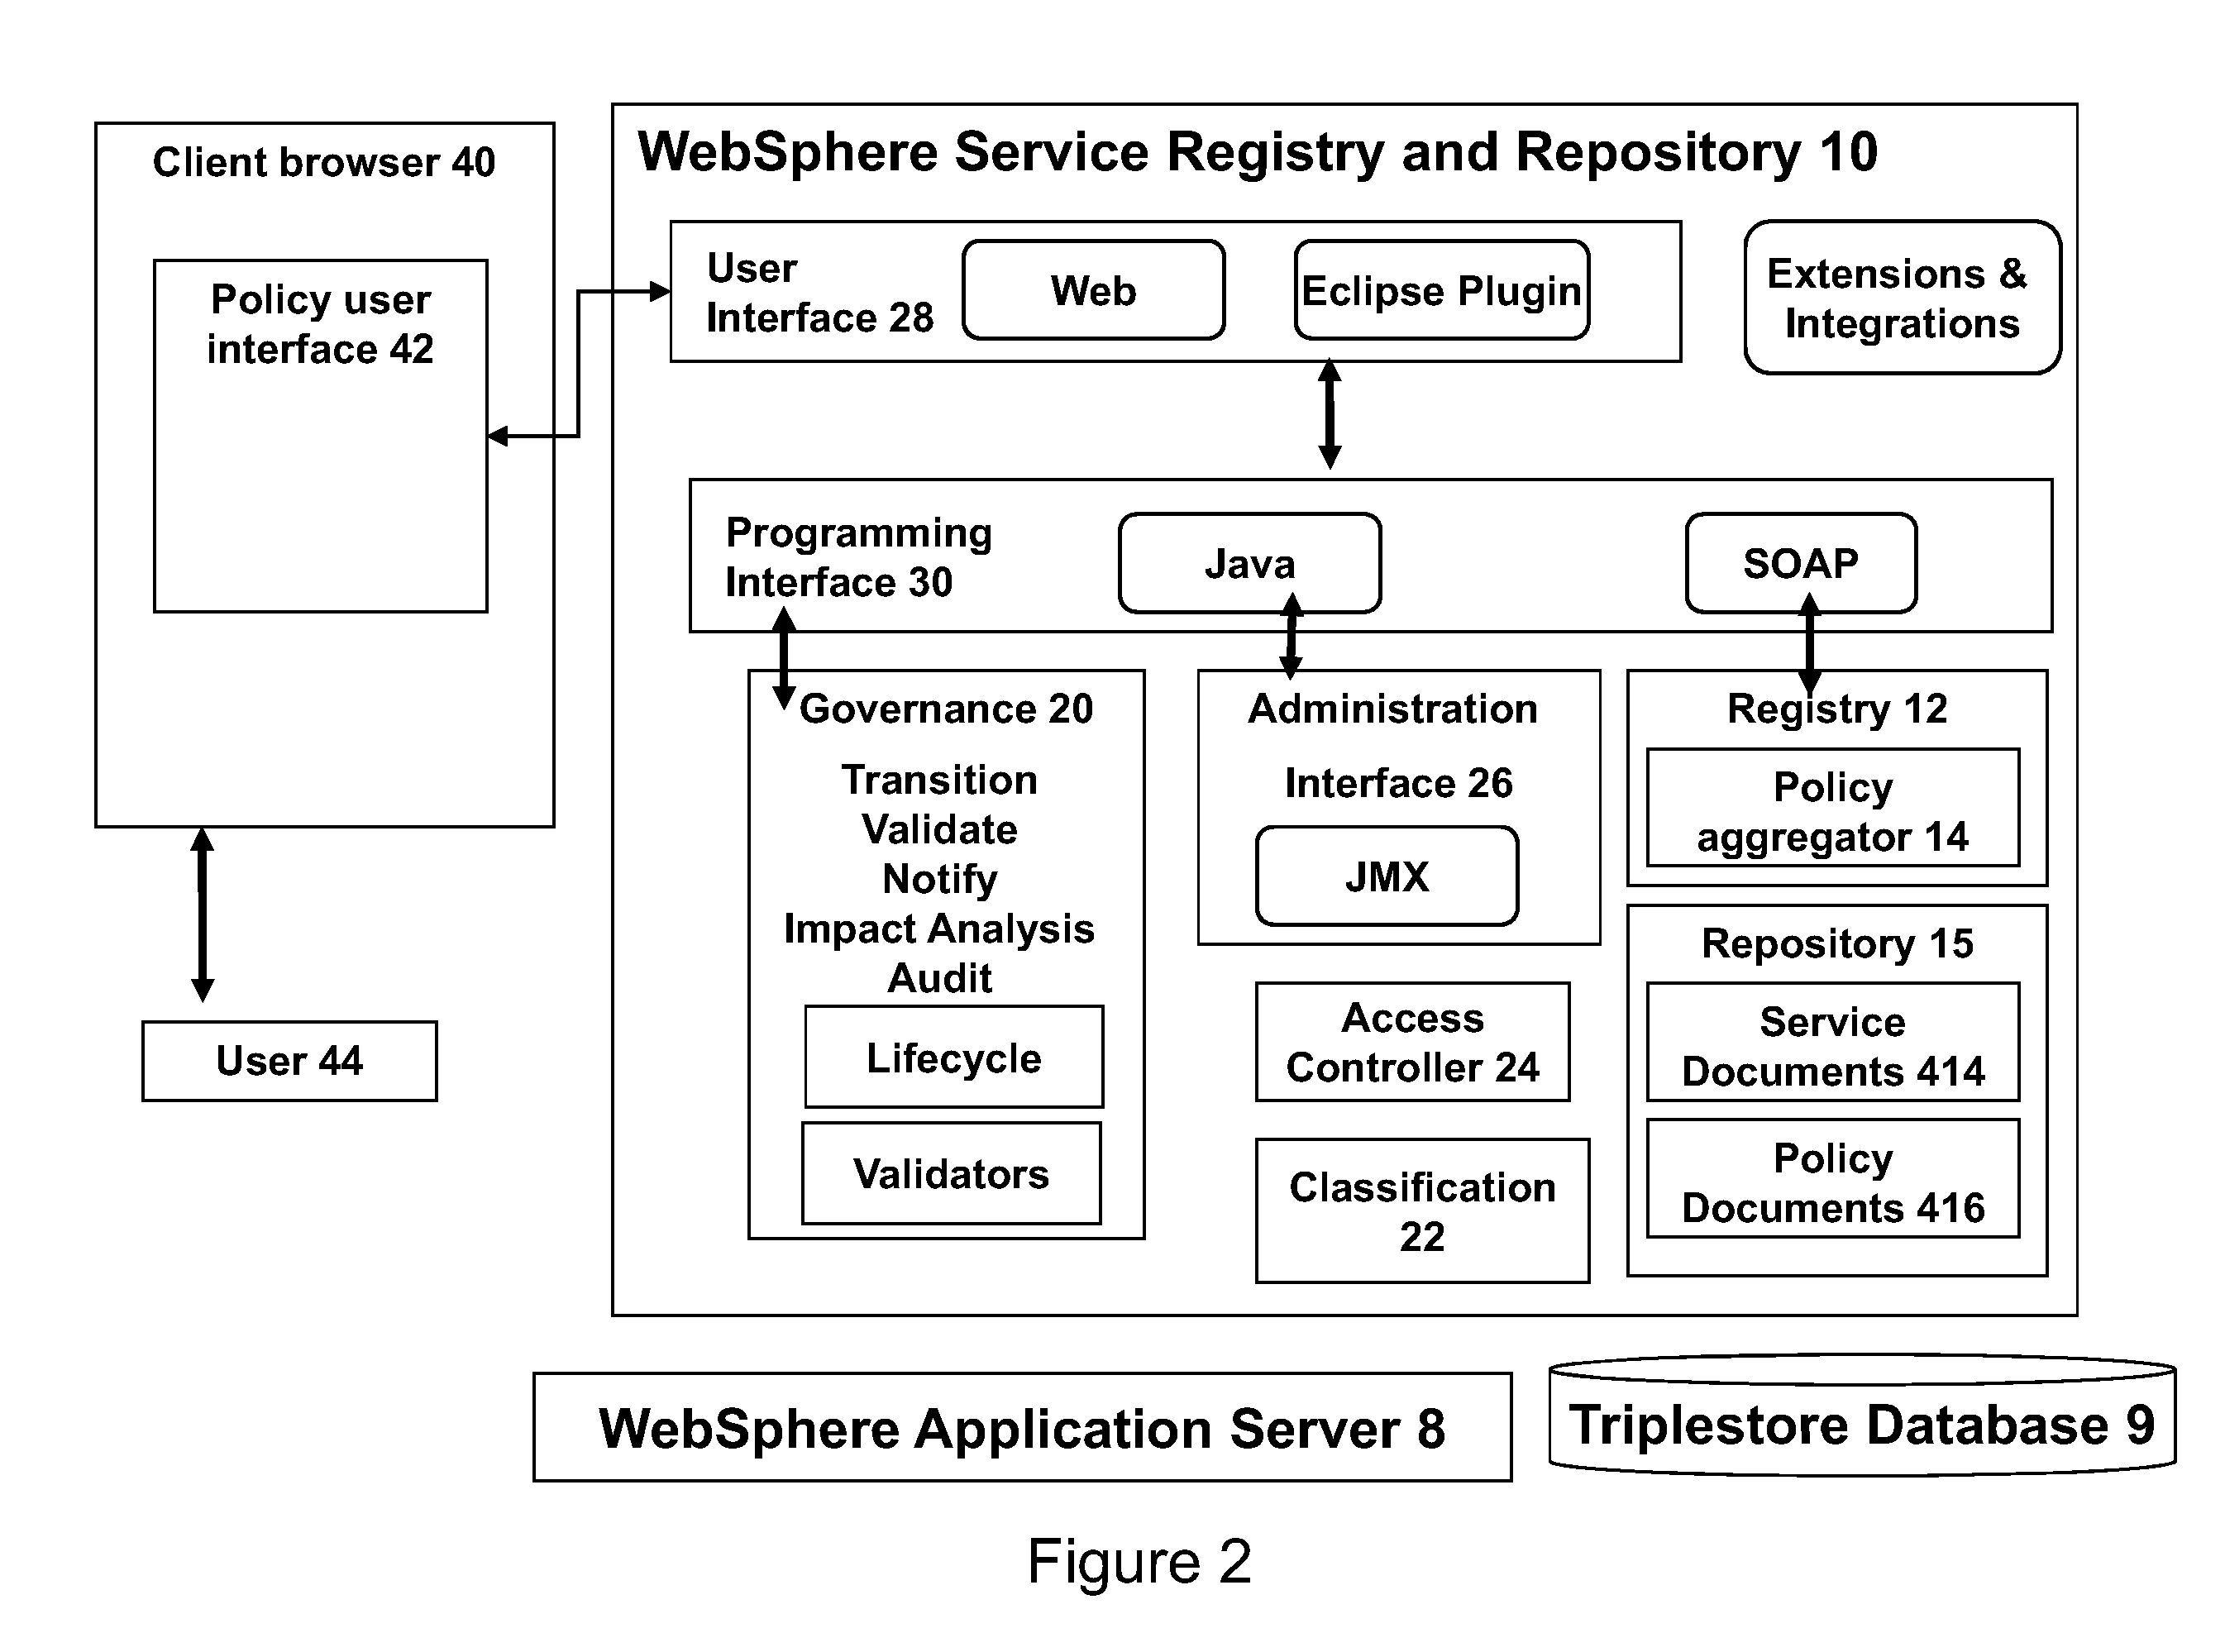 Service registry policy aggregator